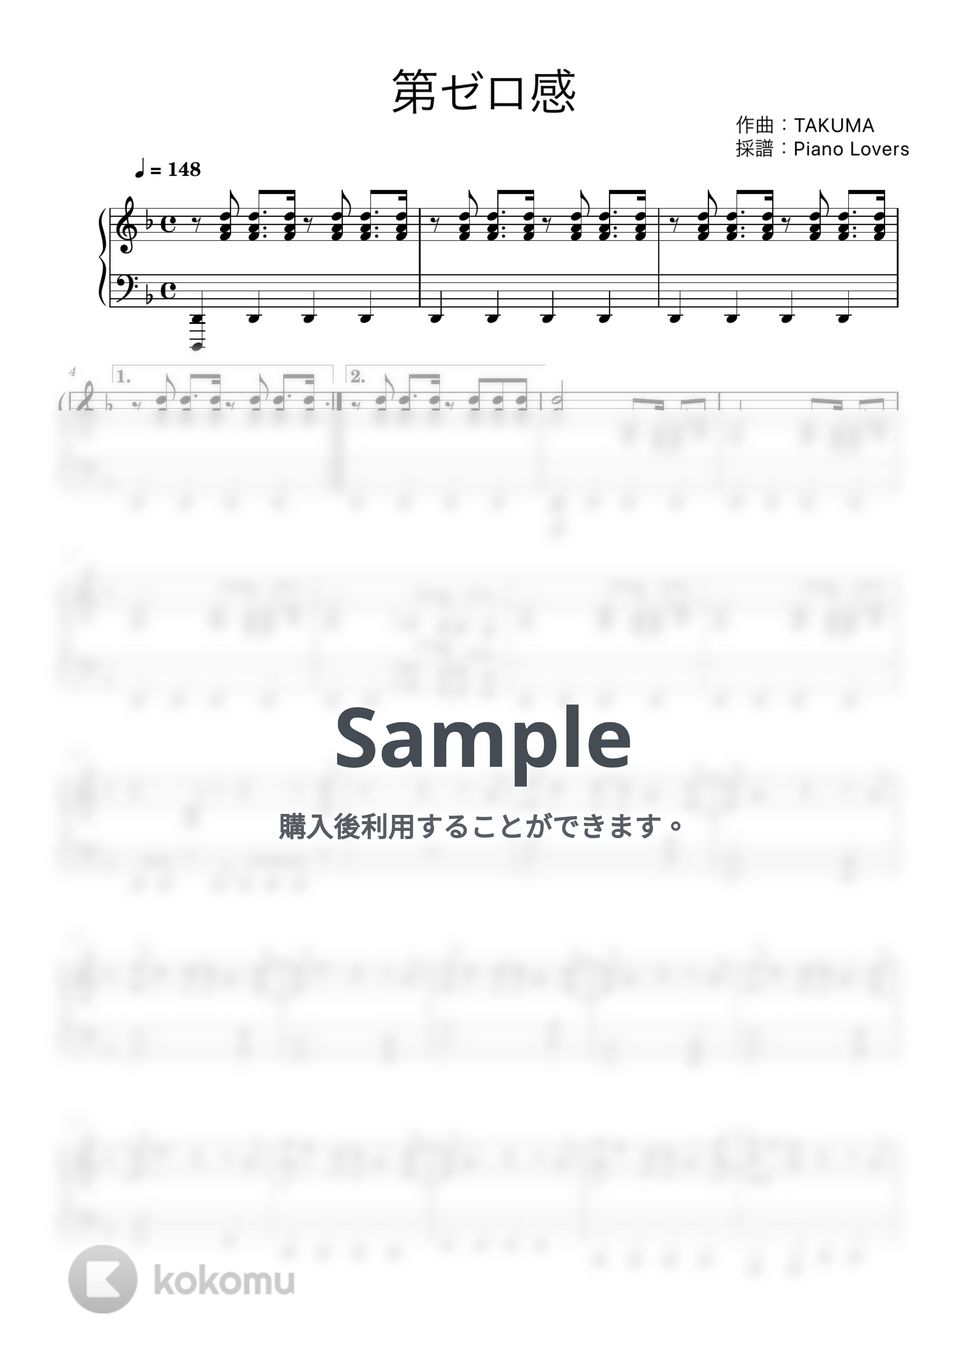 10-FEET - 第ゼロ感 (スラムダンク(SLAM DUNK) / ピアノ楽譜 / 初級) by Piano Lovers.jp